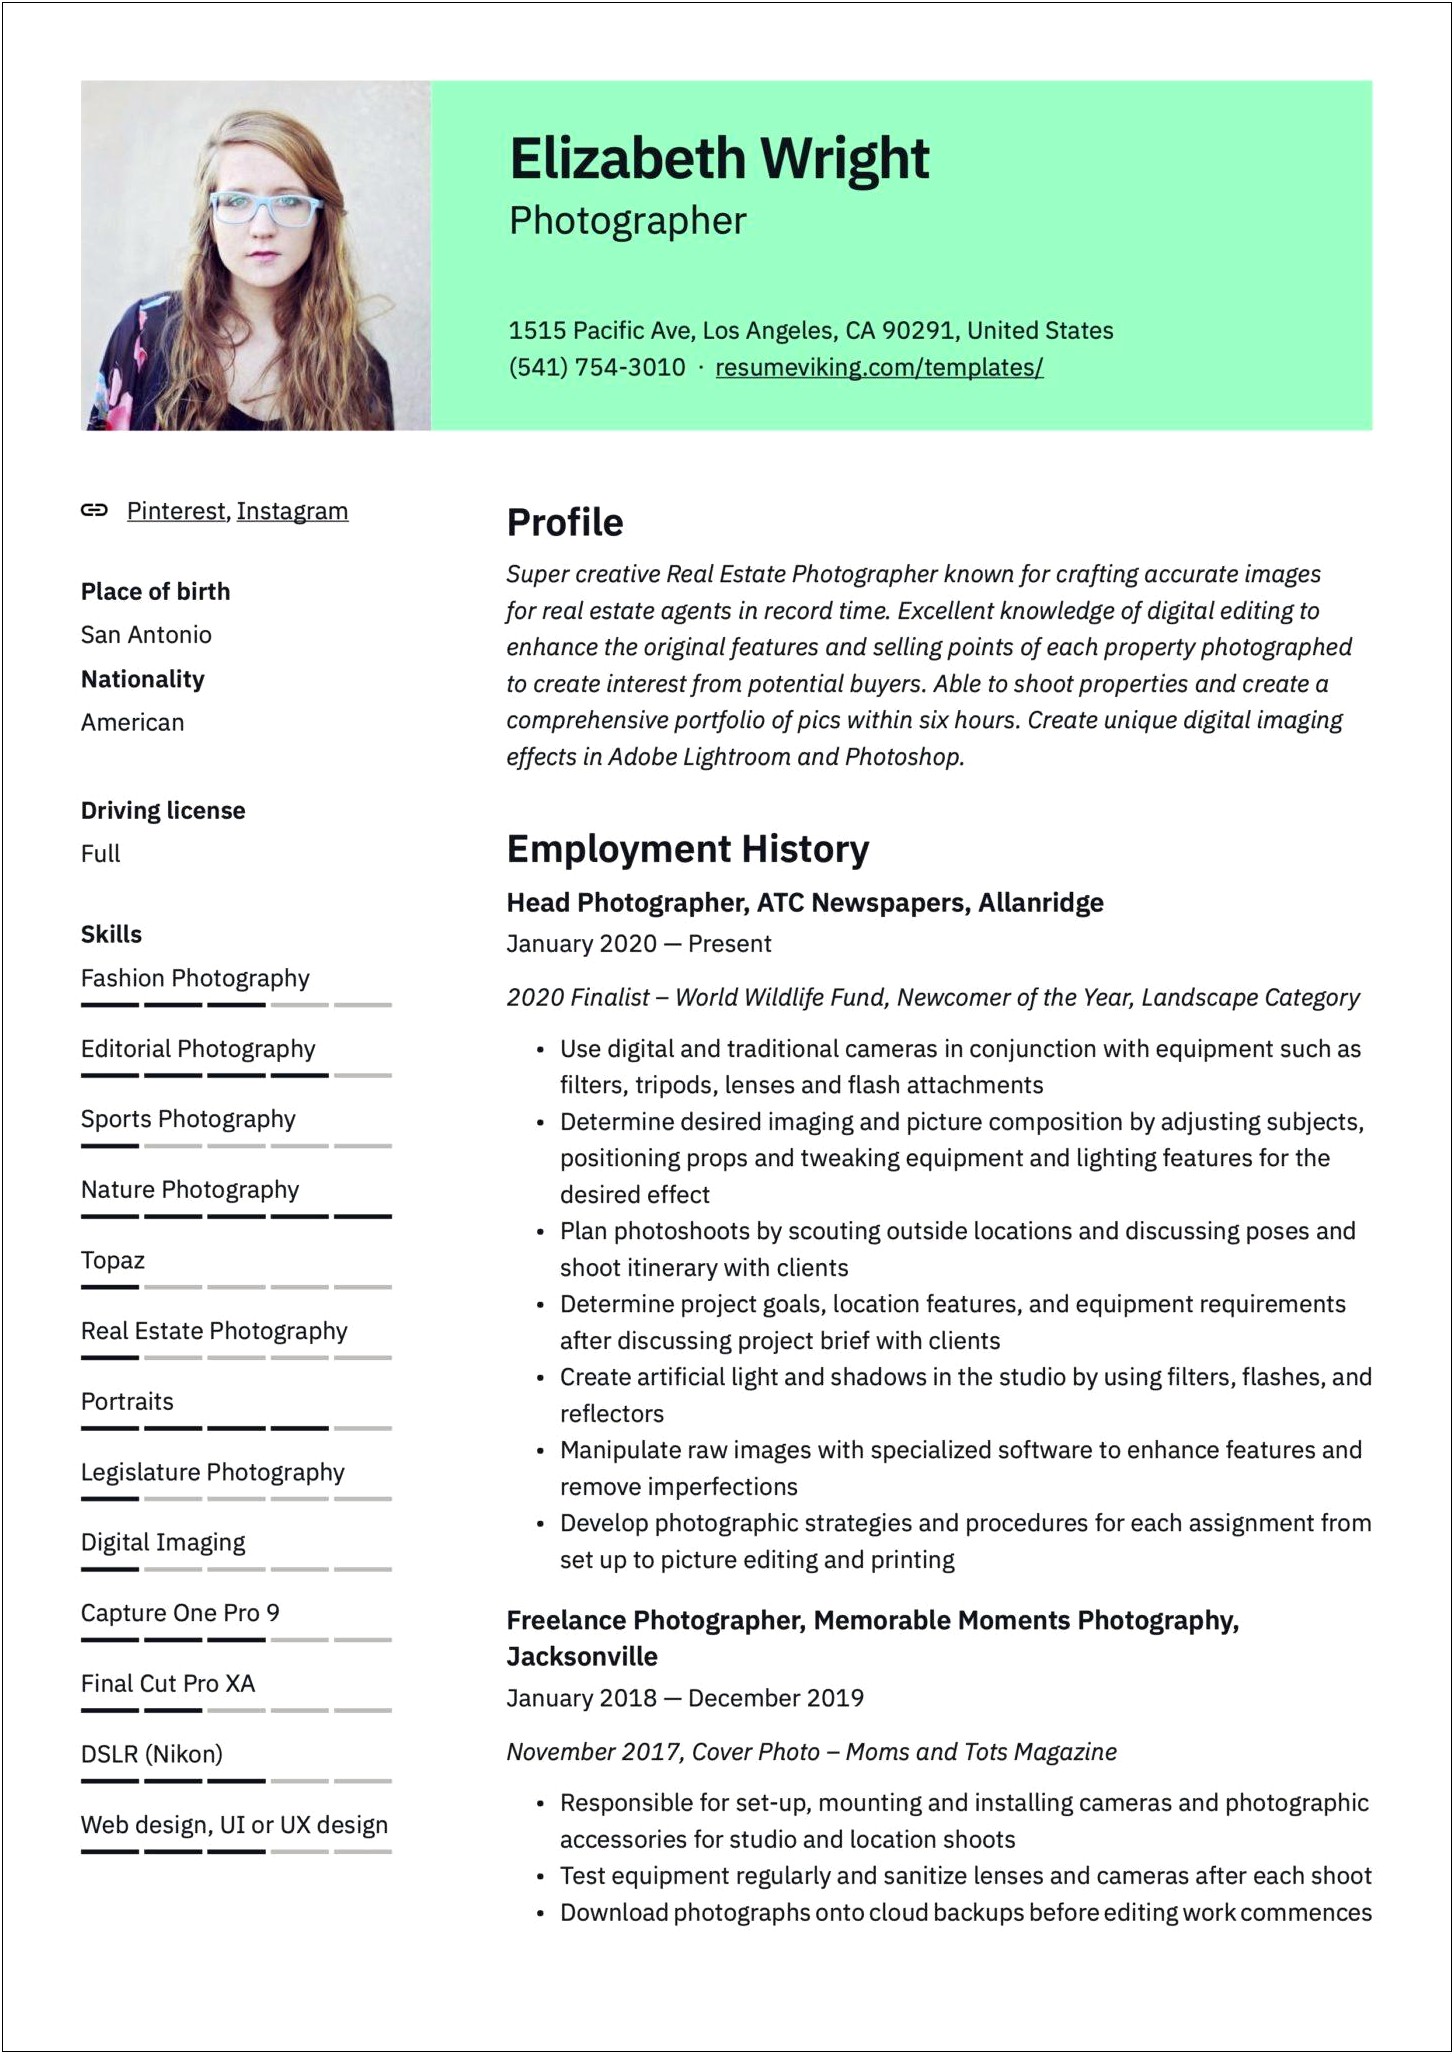 Example Photographer Resume Career Statement